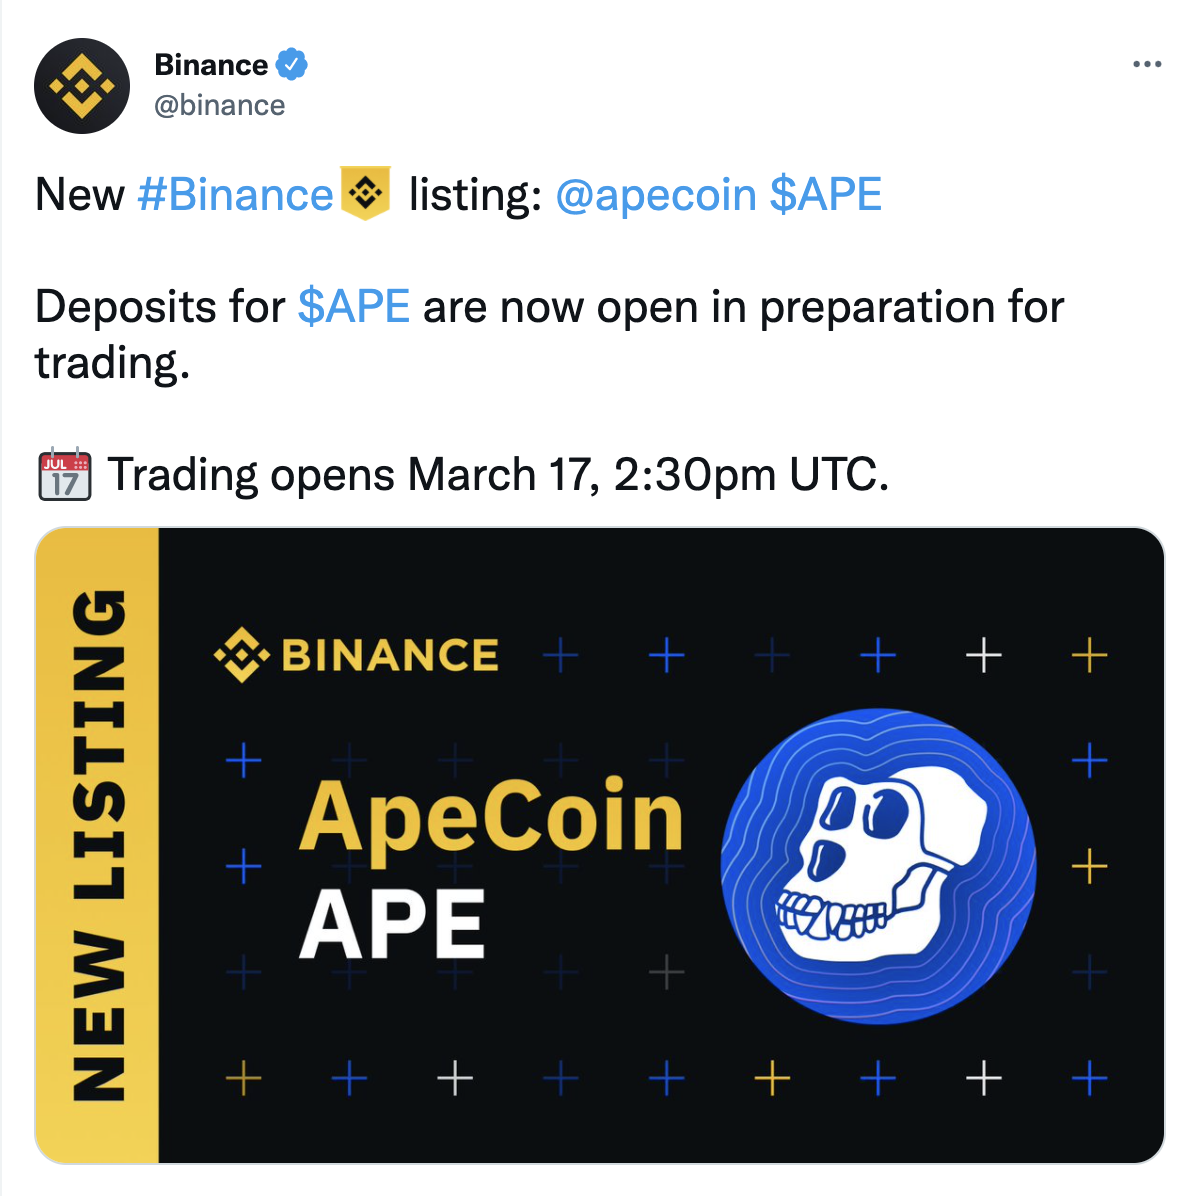 Binance tweet about ApeCoin